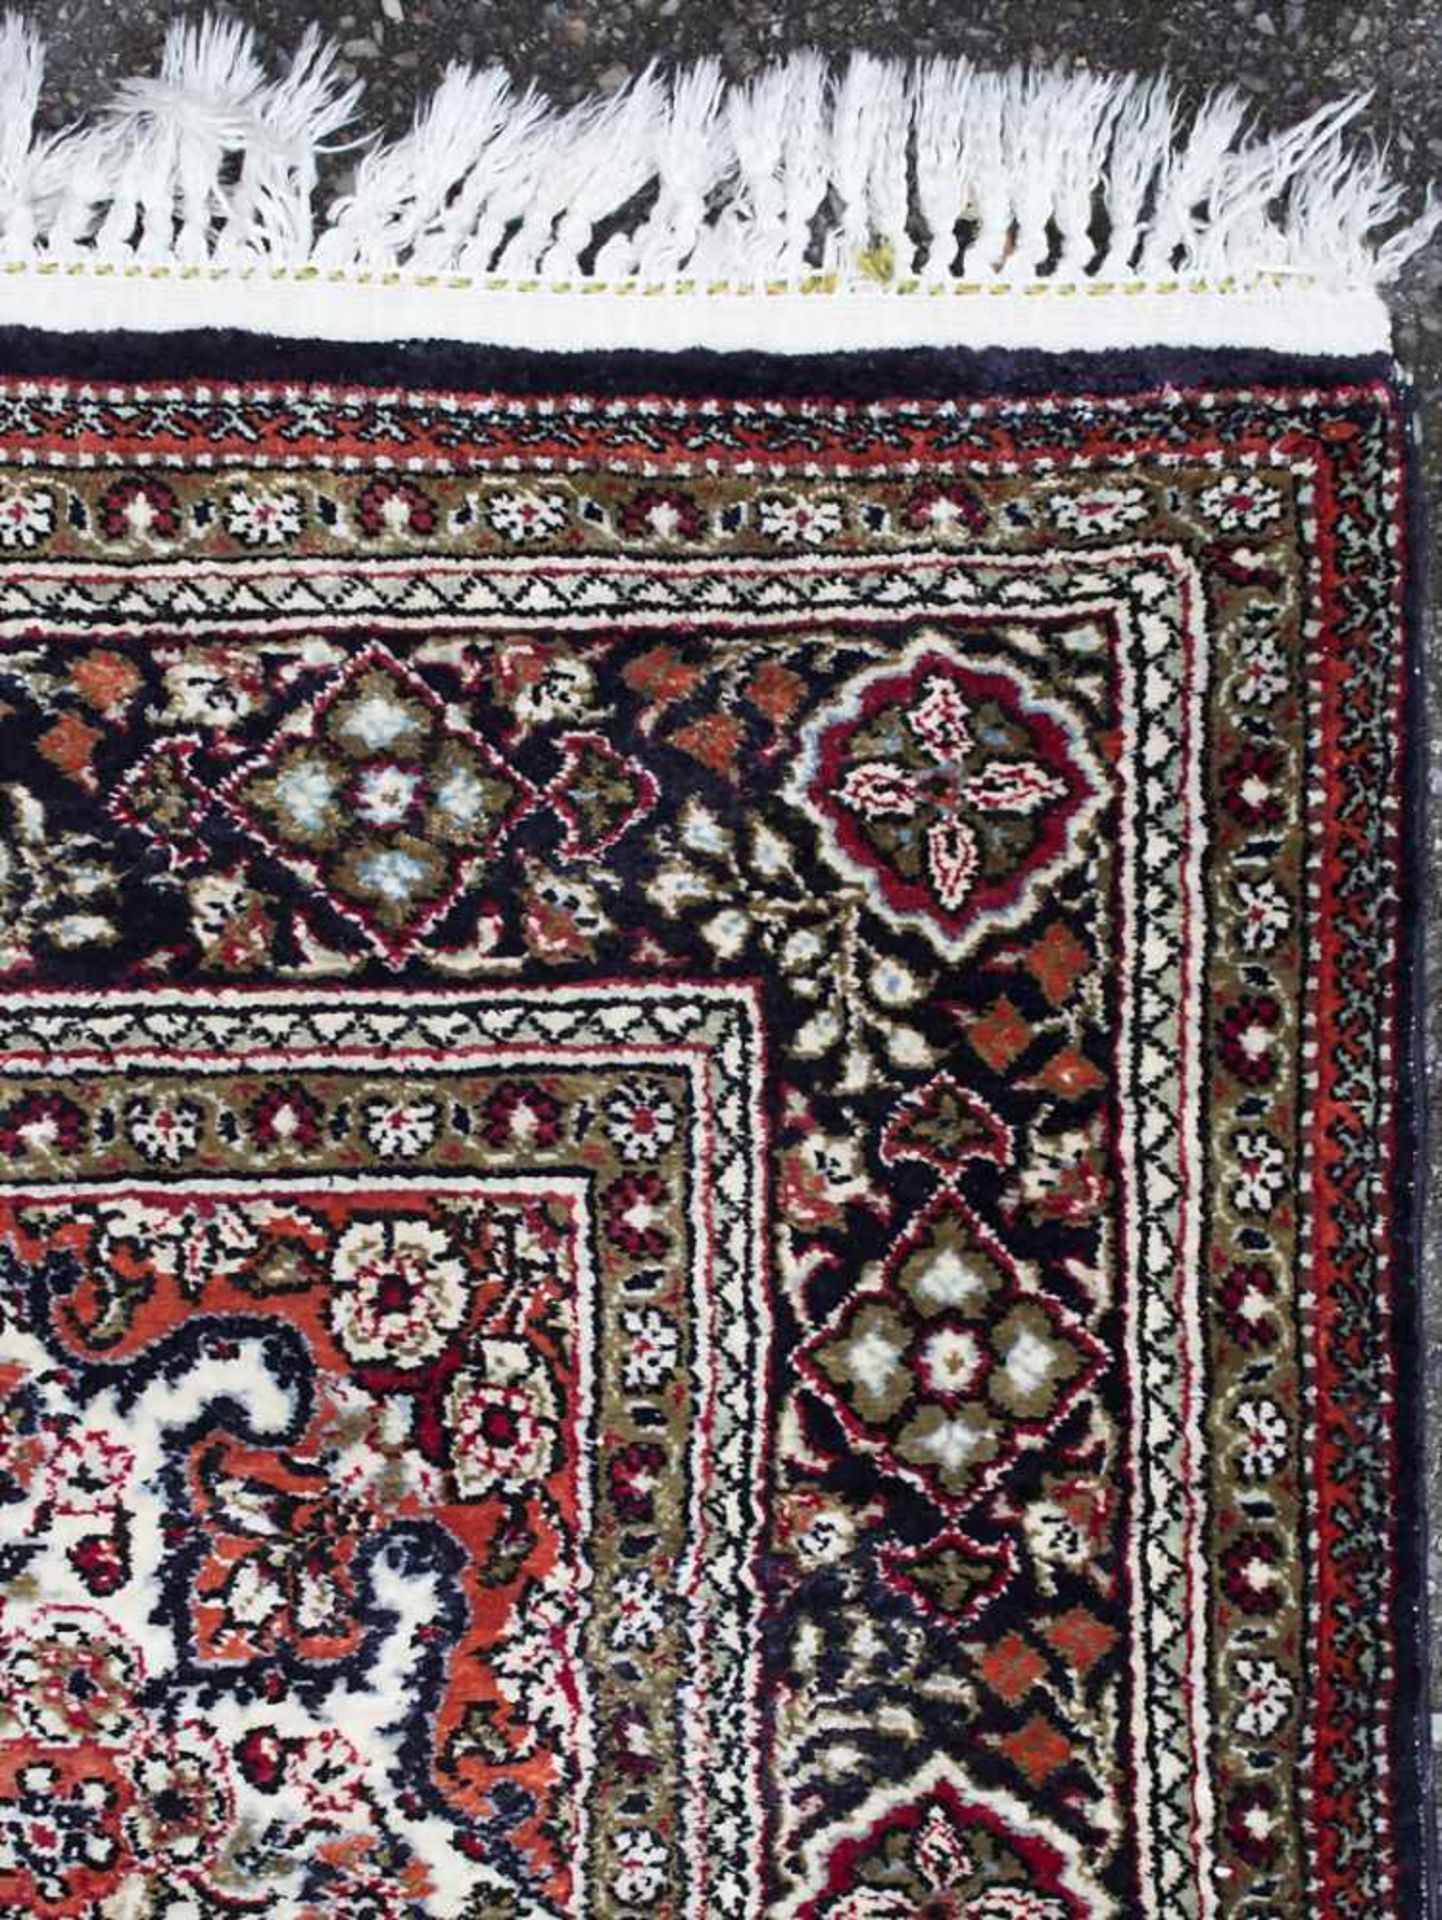 Seidenteppich / A silk carpetMaterial: Seide auf Seide, feine Knüpfung,Maße: 142 x 80 cm, Zustand: - Image 4 of 5